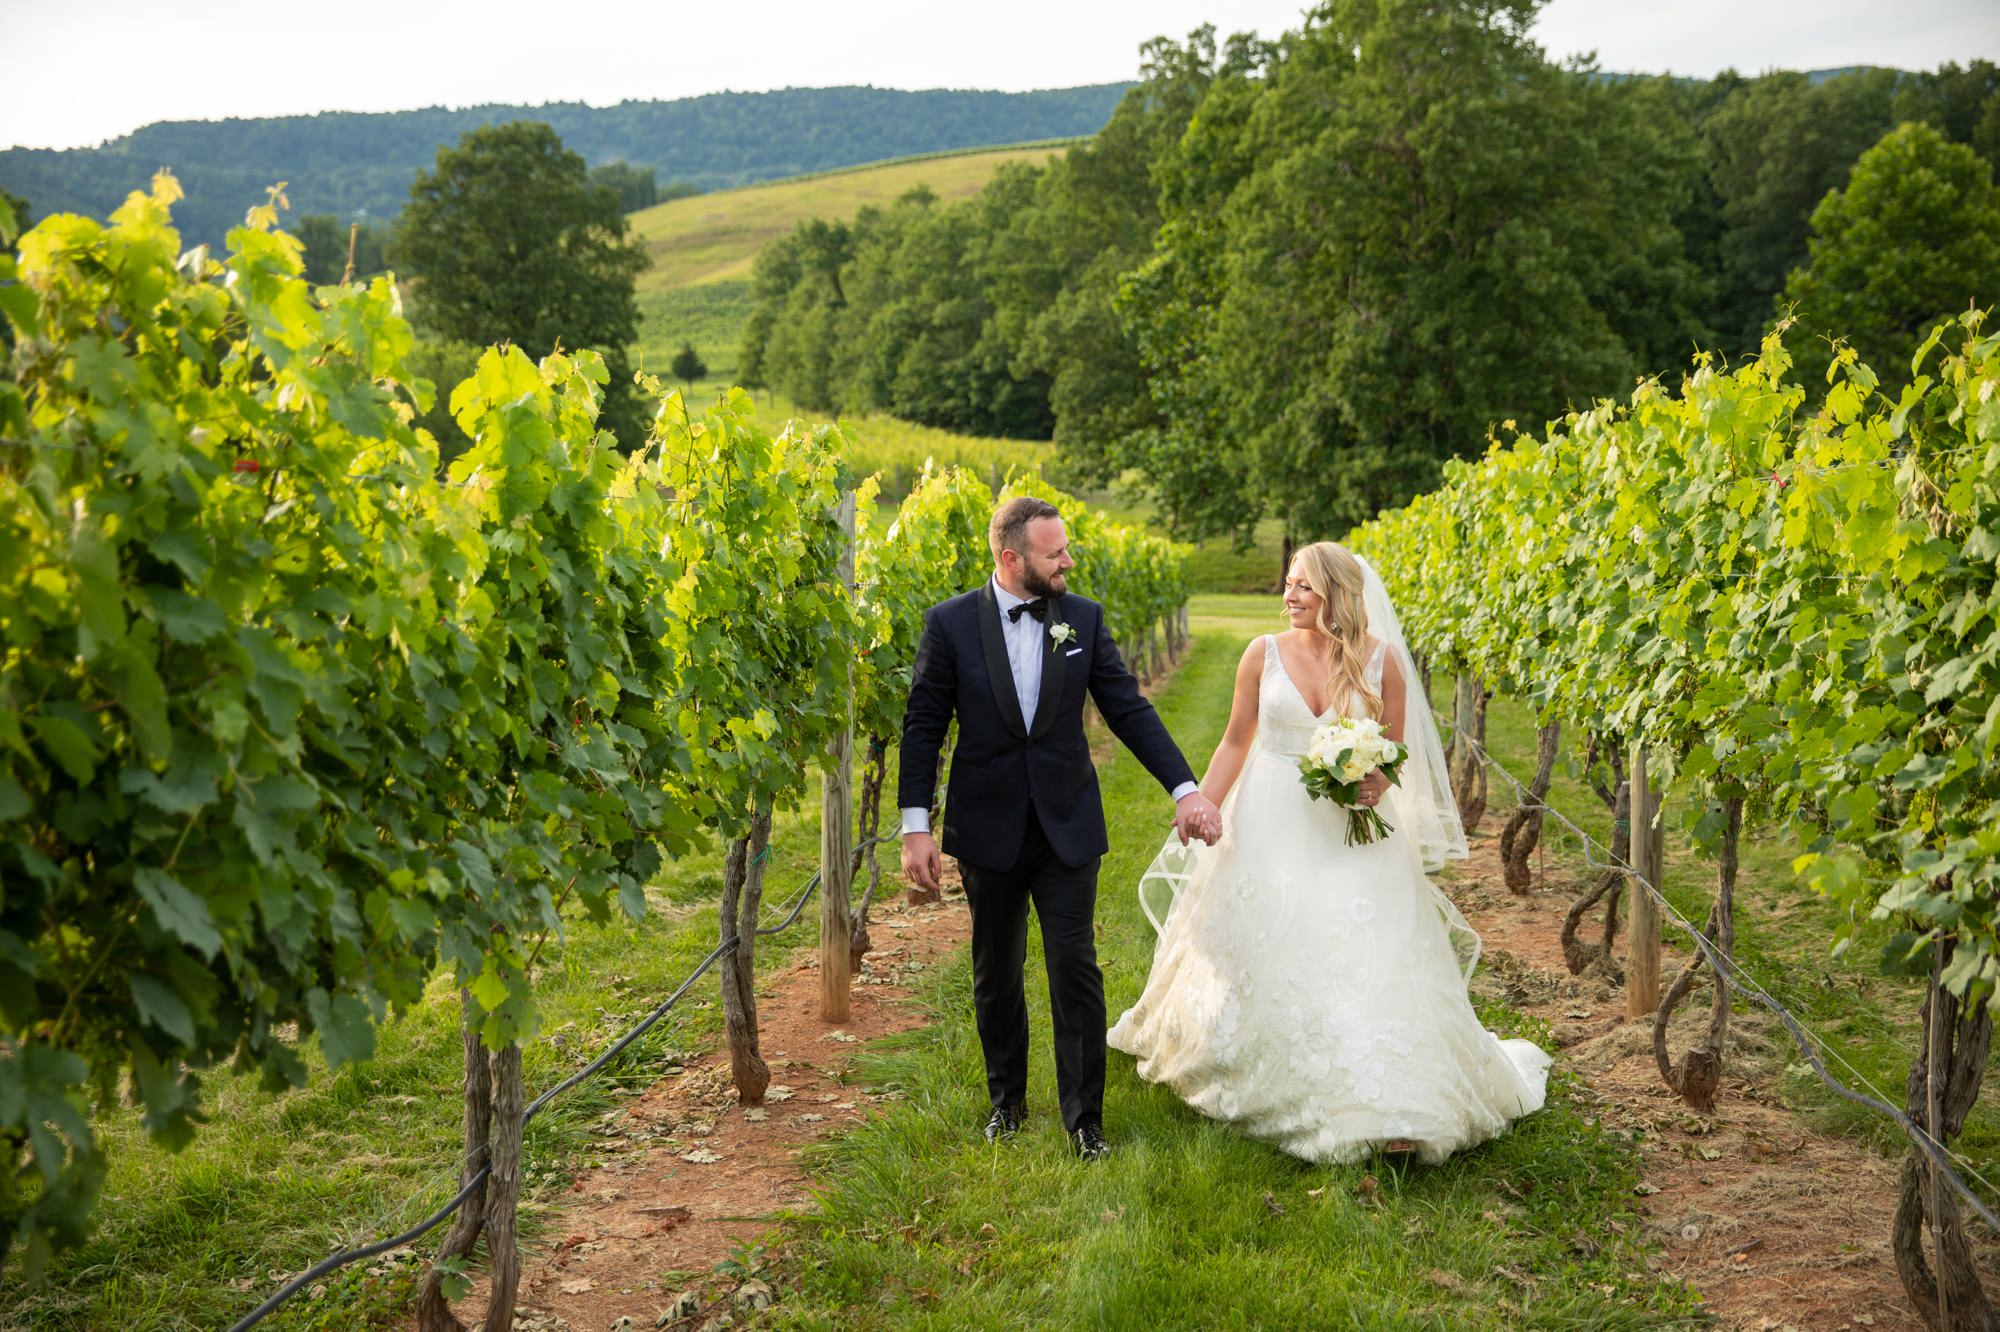 Charlottesville Vineyard Wedding Venues